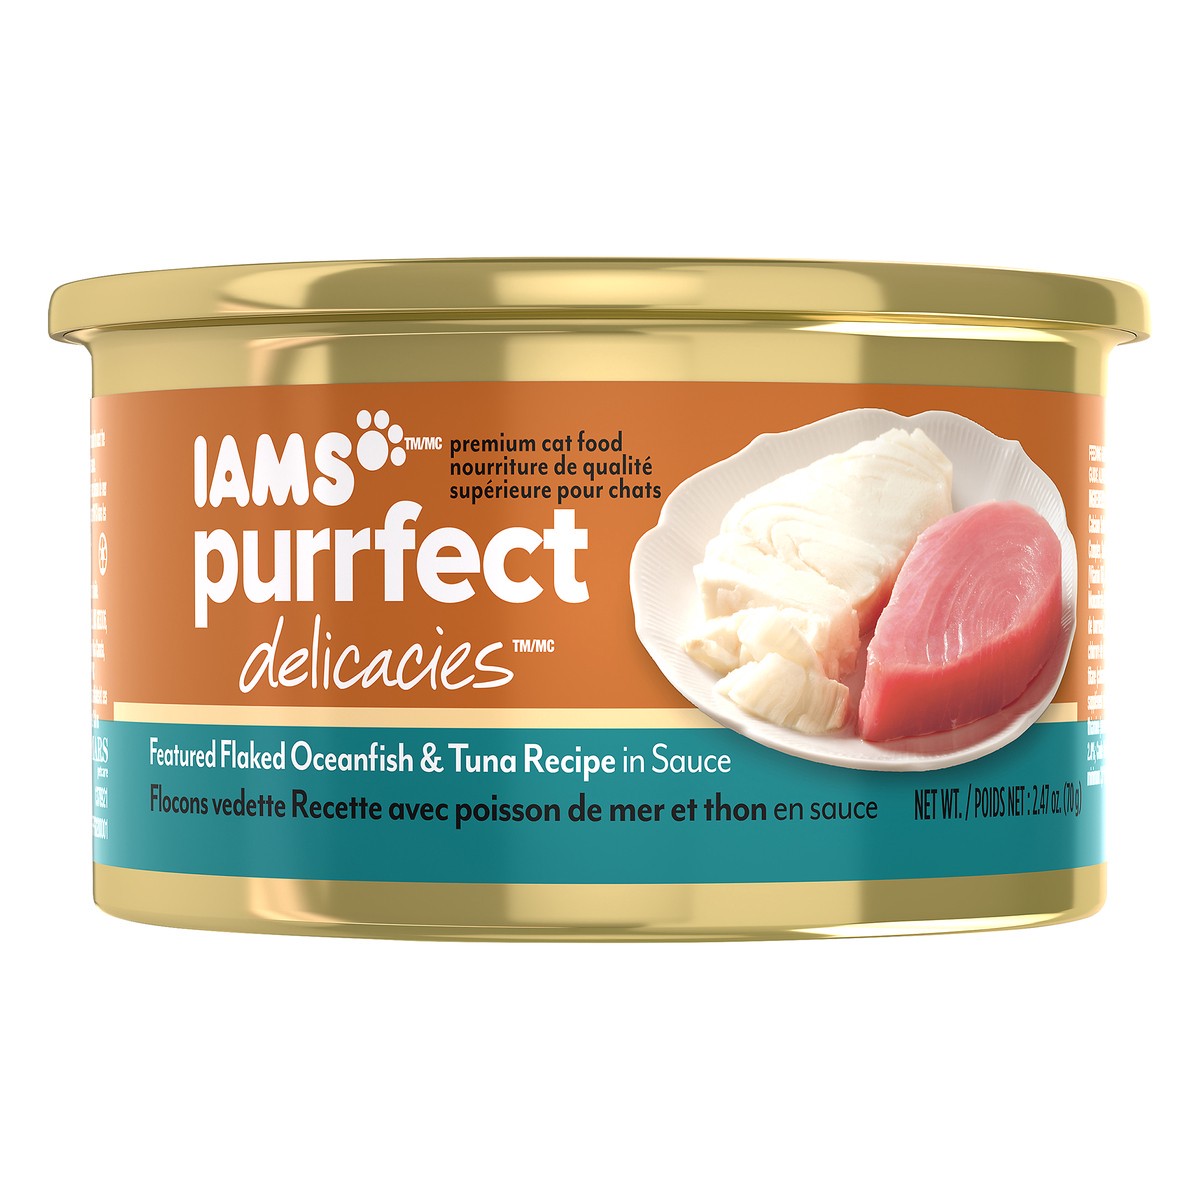 slide 12 of 12, Iams Purrfect Delicacies Premier Flaked Oceanfish & Tuna Recipe in Sauce Premium Cat Food 2.47 oz. Can, 2.47 oz